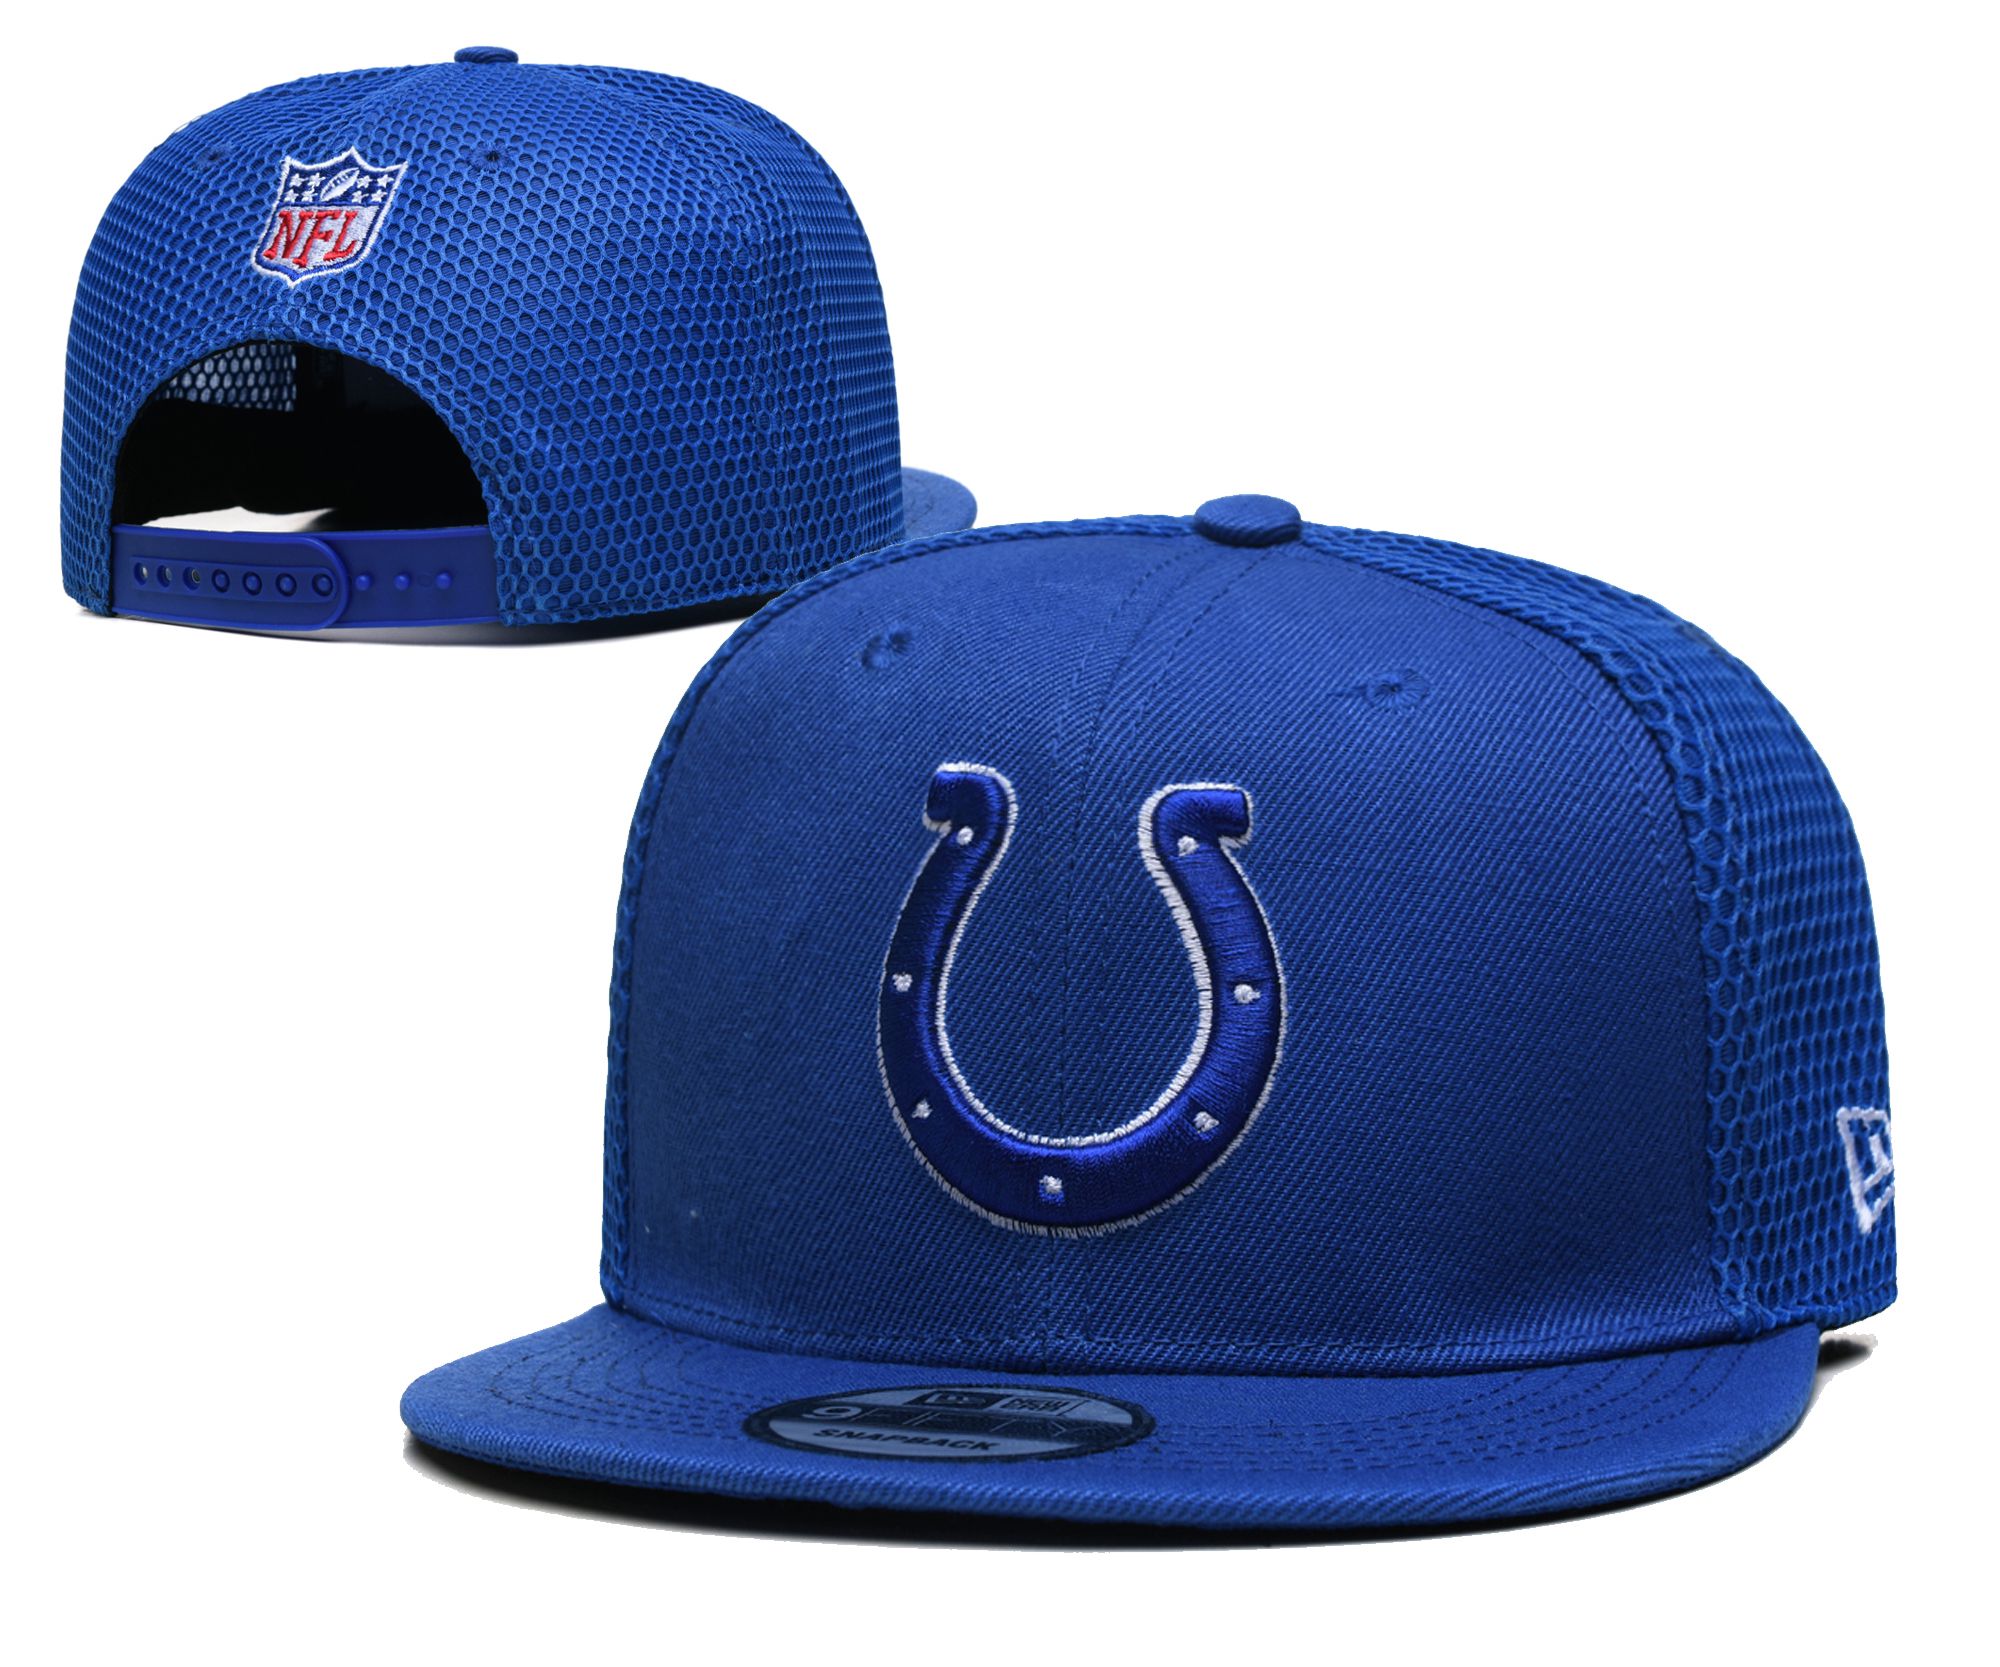 2022 NFL Indianapolis Colts Hat TX 221->nfl hats->Sports Caps